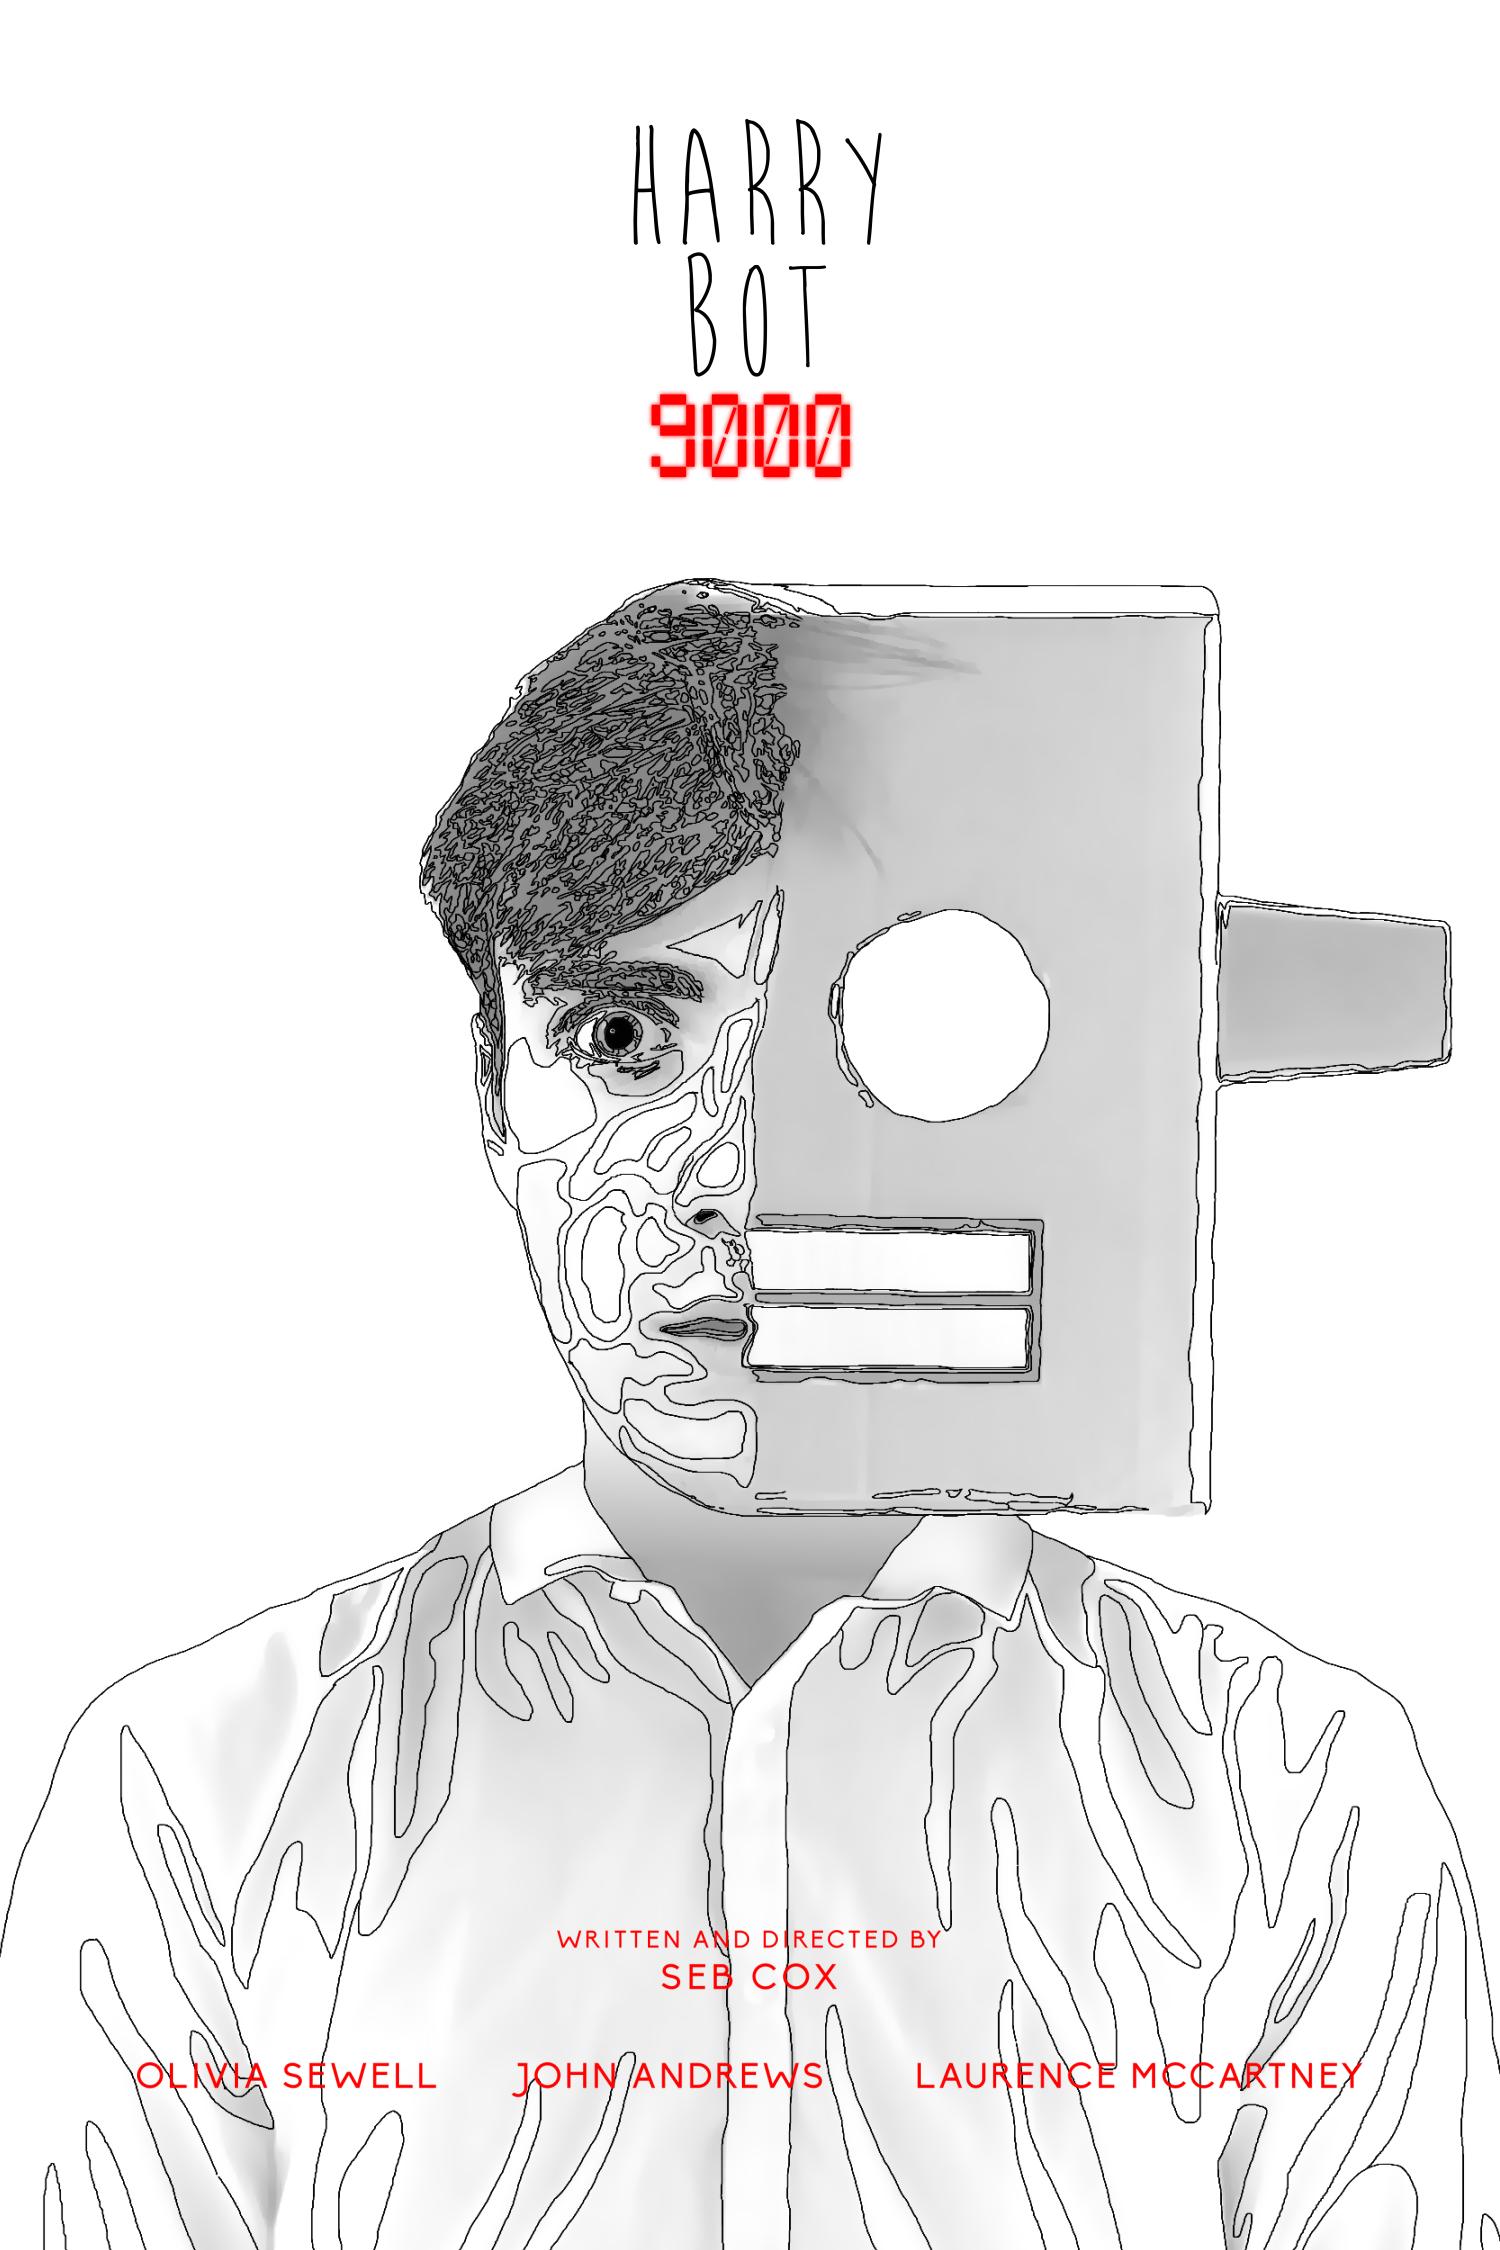 Harry Bot 9000